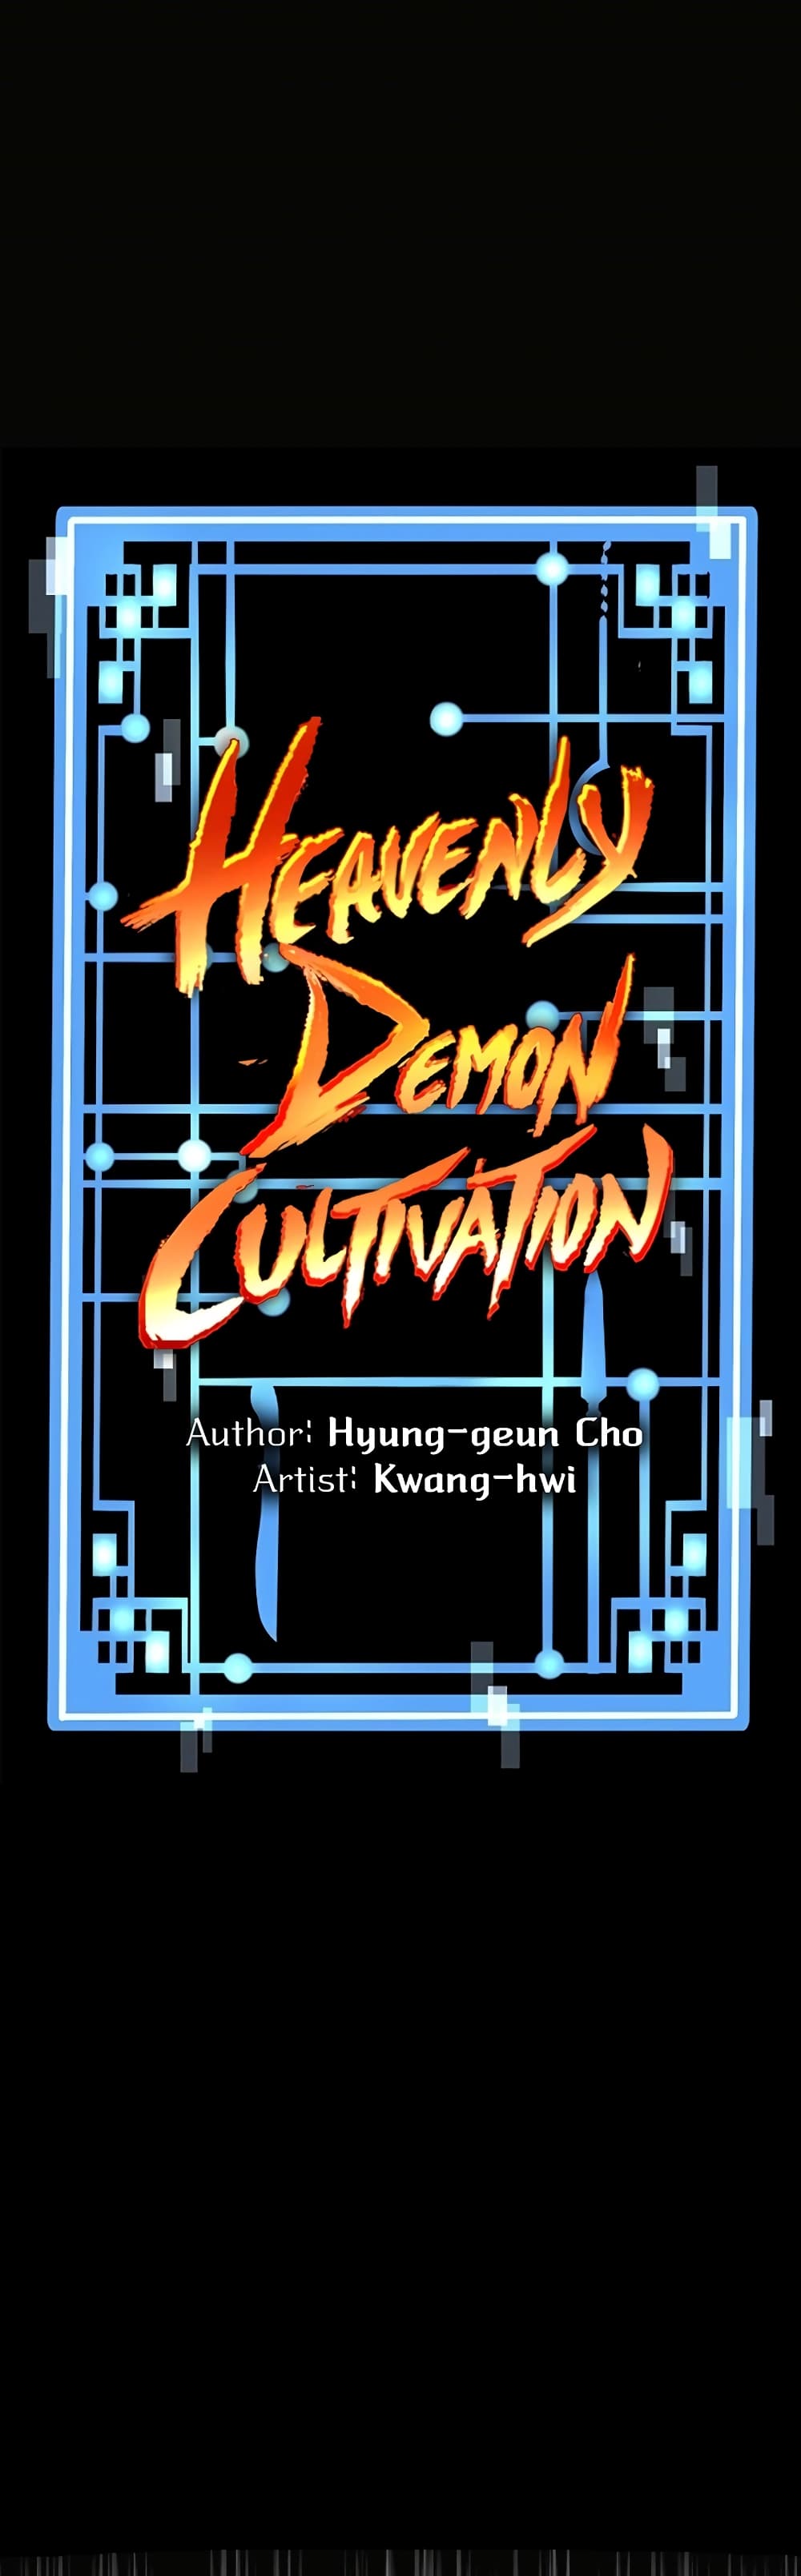 Heavenly-Demon-Cultivation-Simulation--31-2.jpg